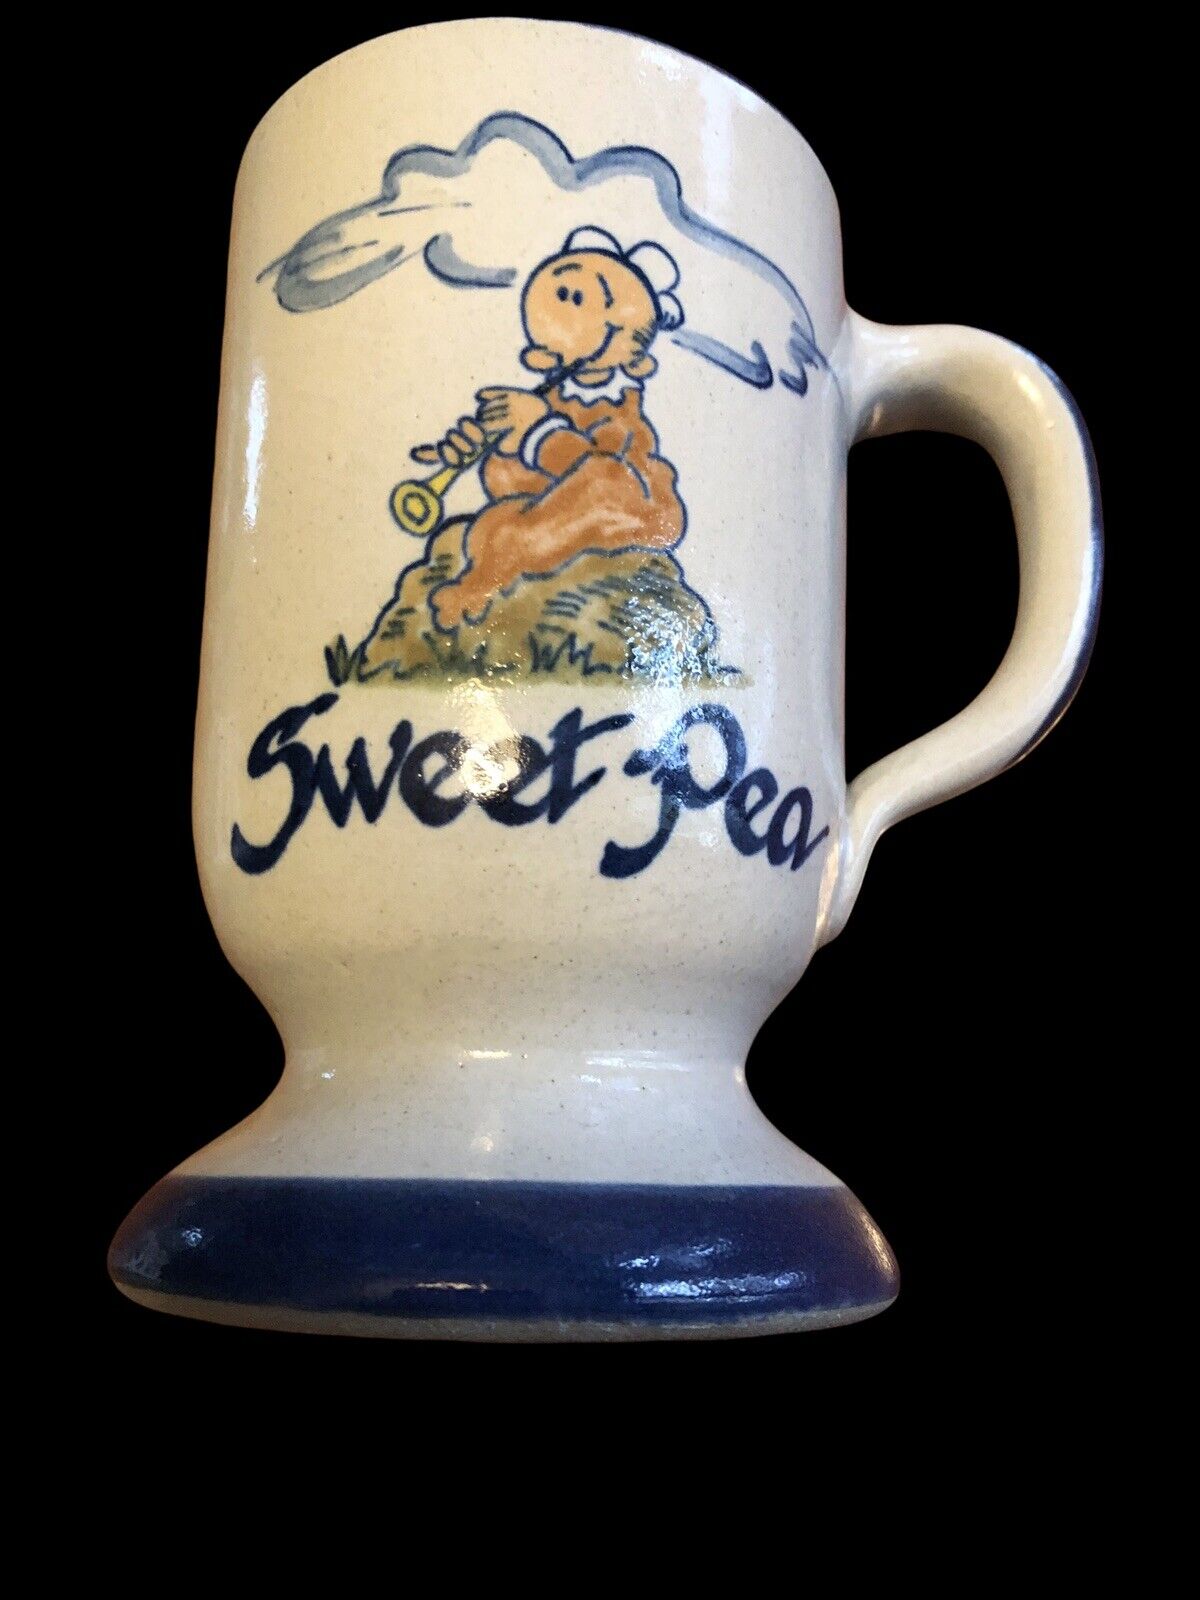 Ultra Rare Vintage Louisville stoneware Sweet Pea mug - From Popeye Adorable Art